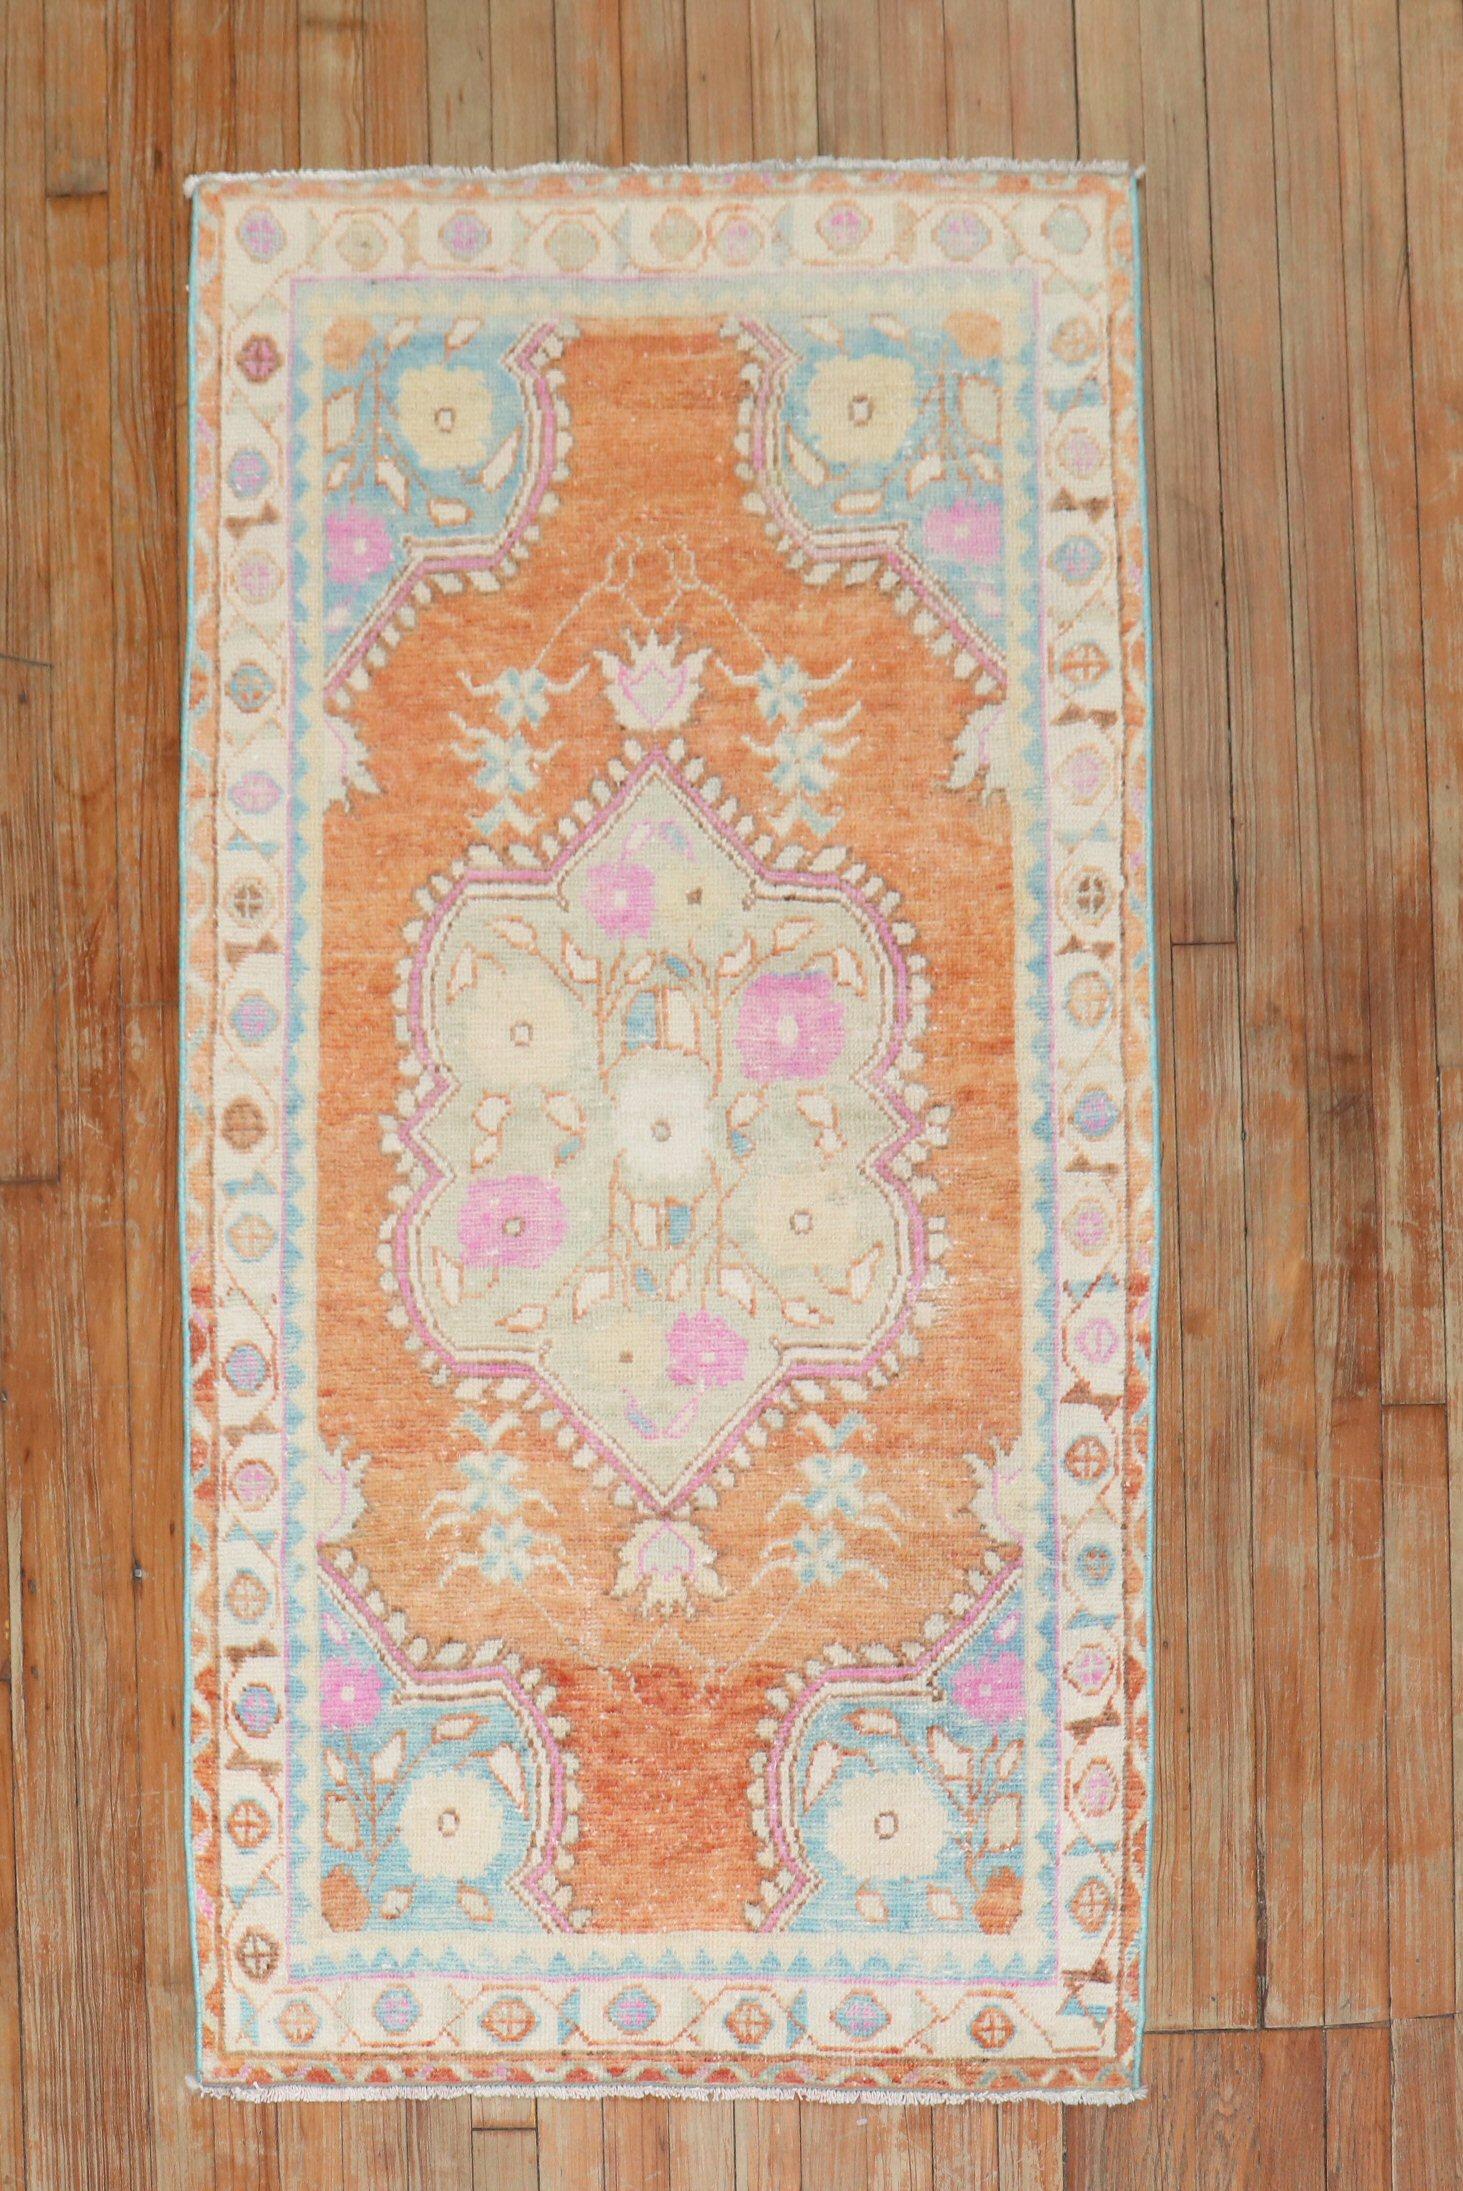 Mid-20th Century Turkiish anatolian rug featuring a bright orange color.

Measures: 2'10